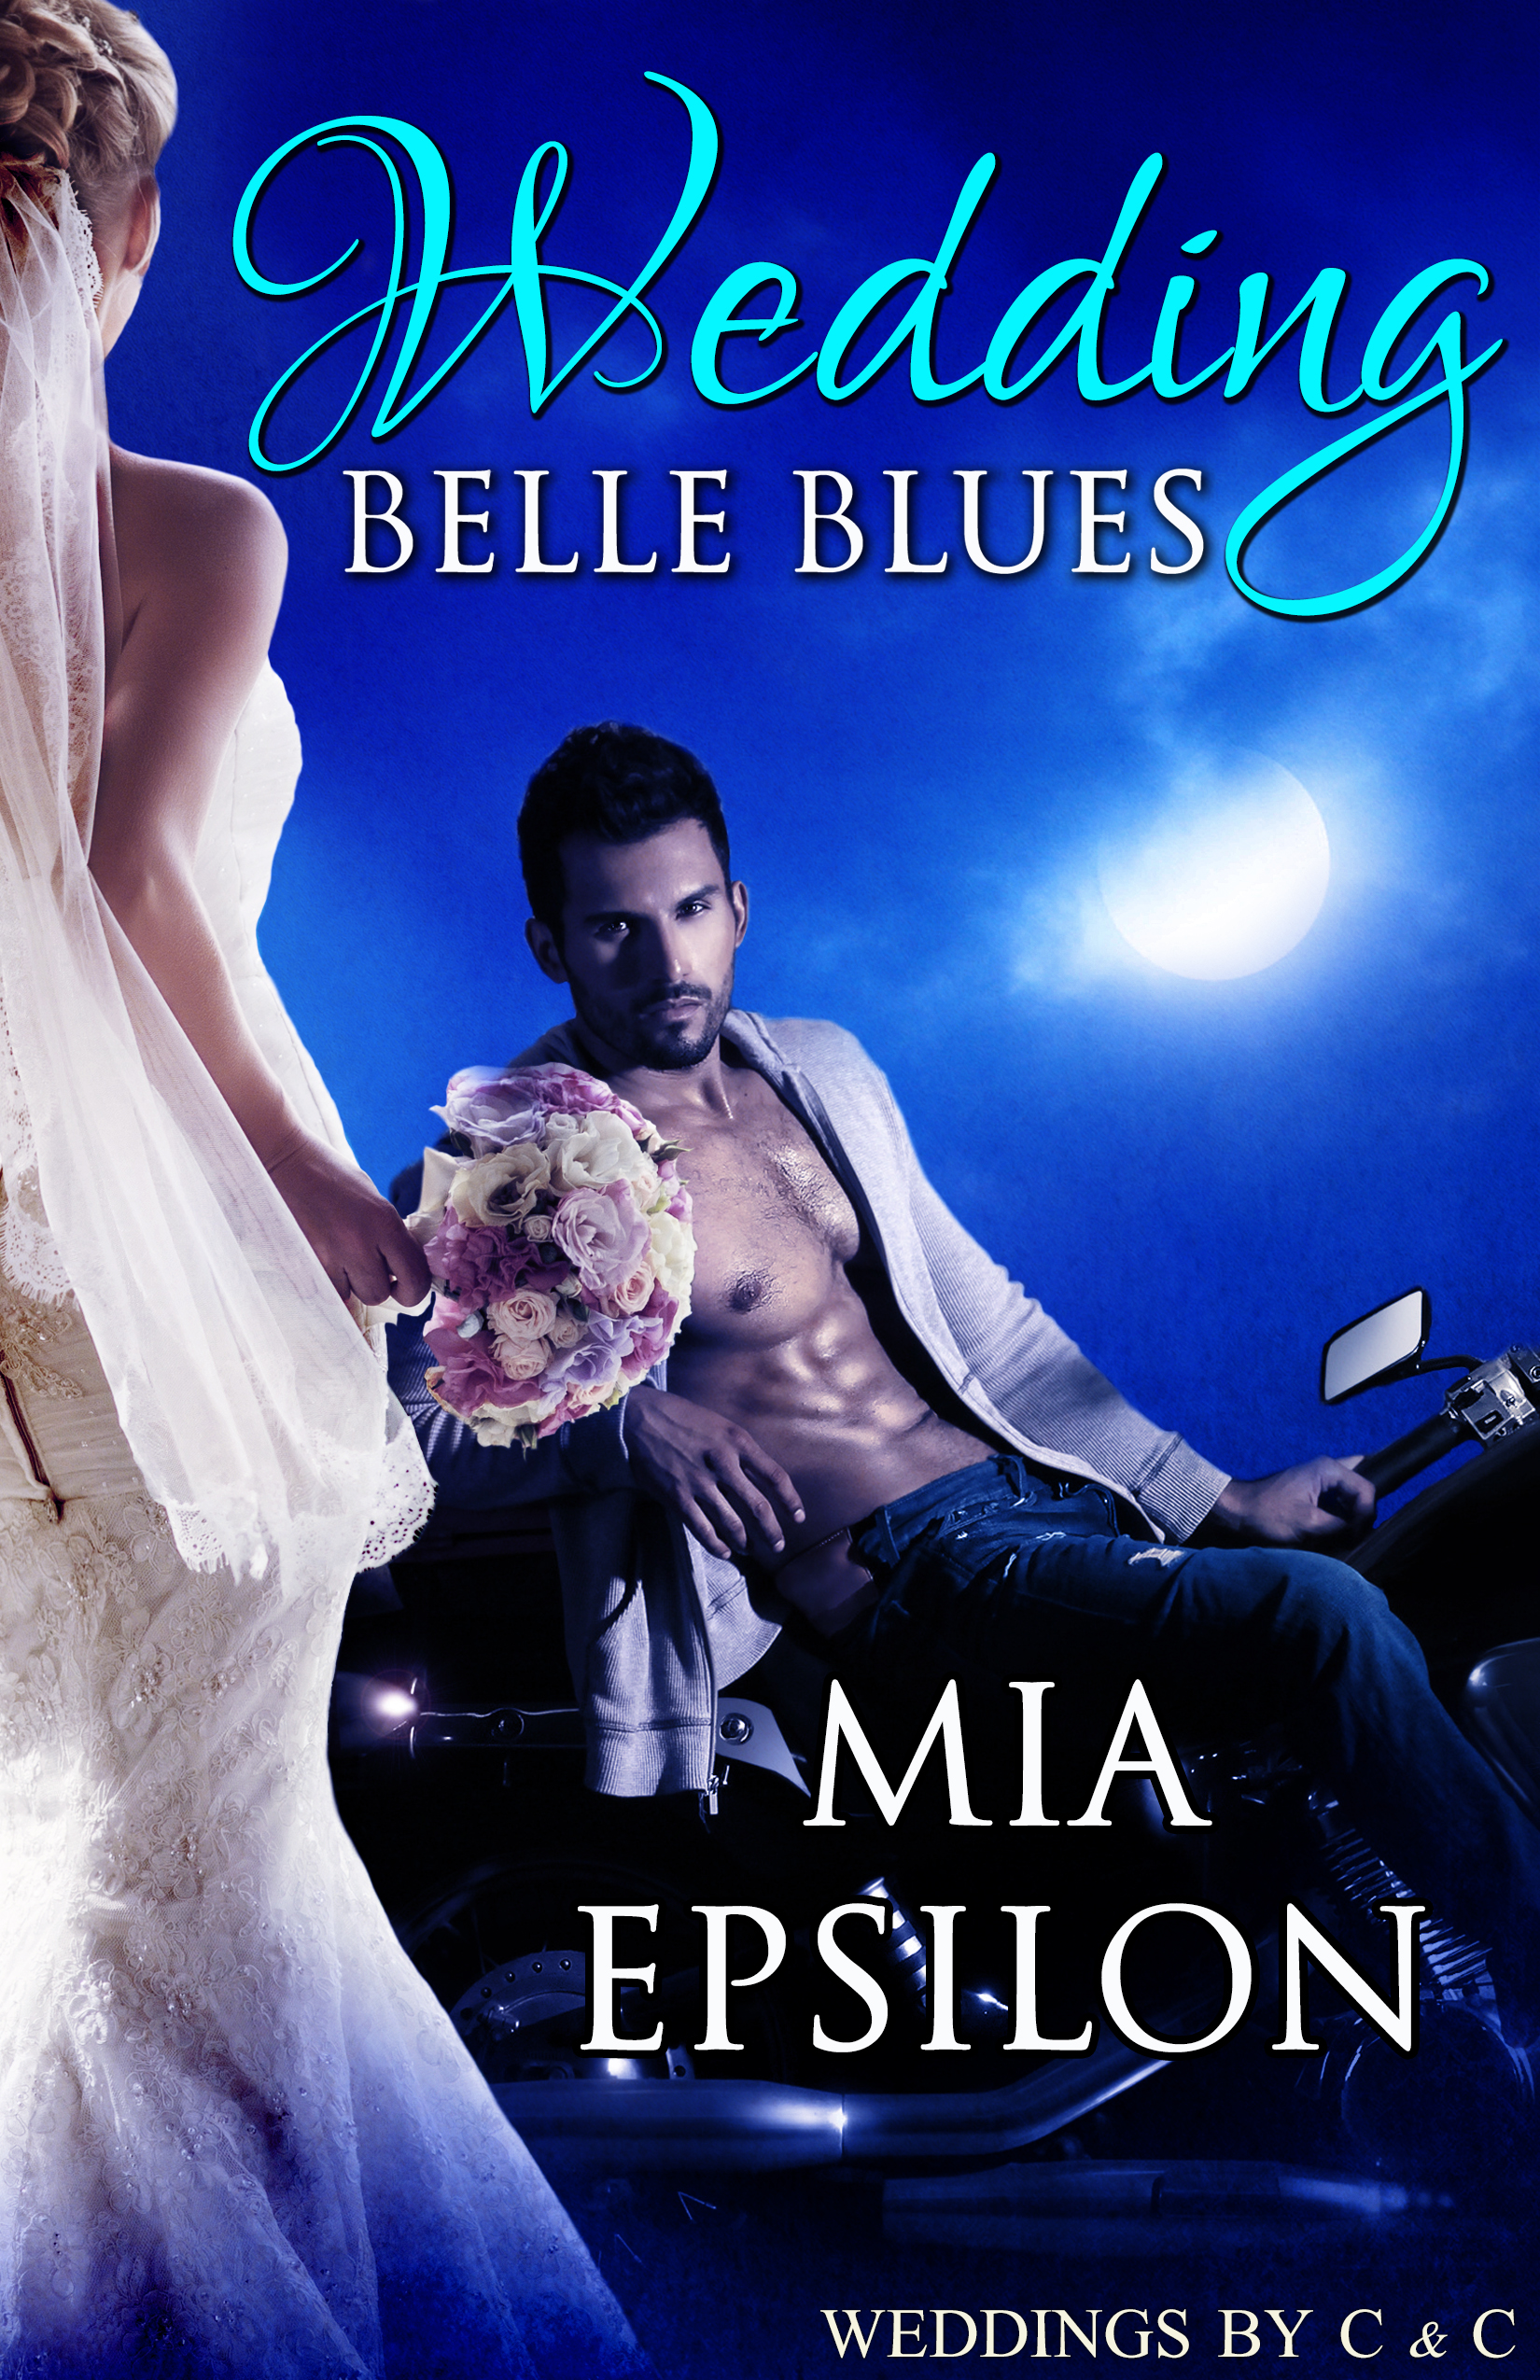 FREE: Wedding Belle Blues by Mia Epsilon